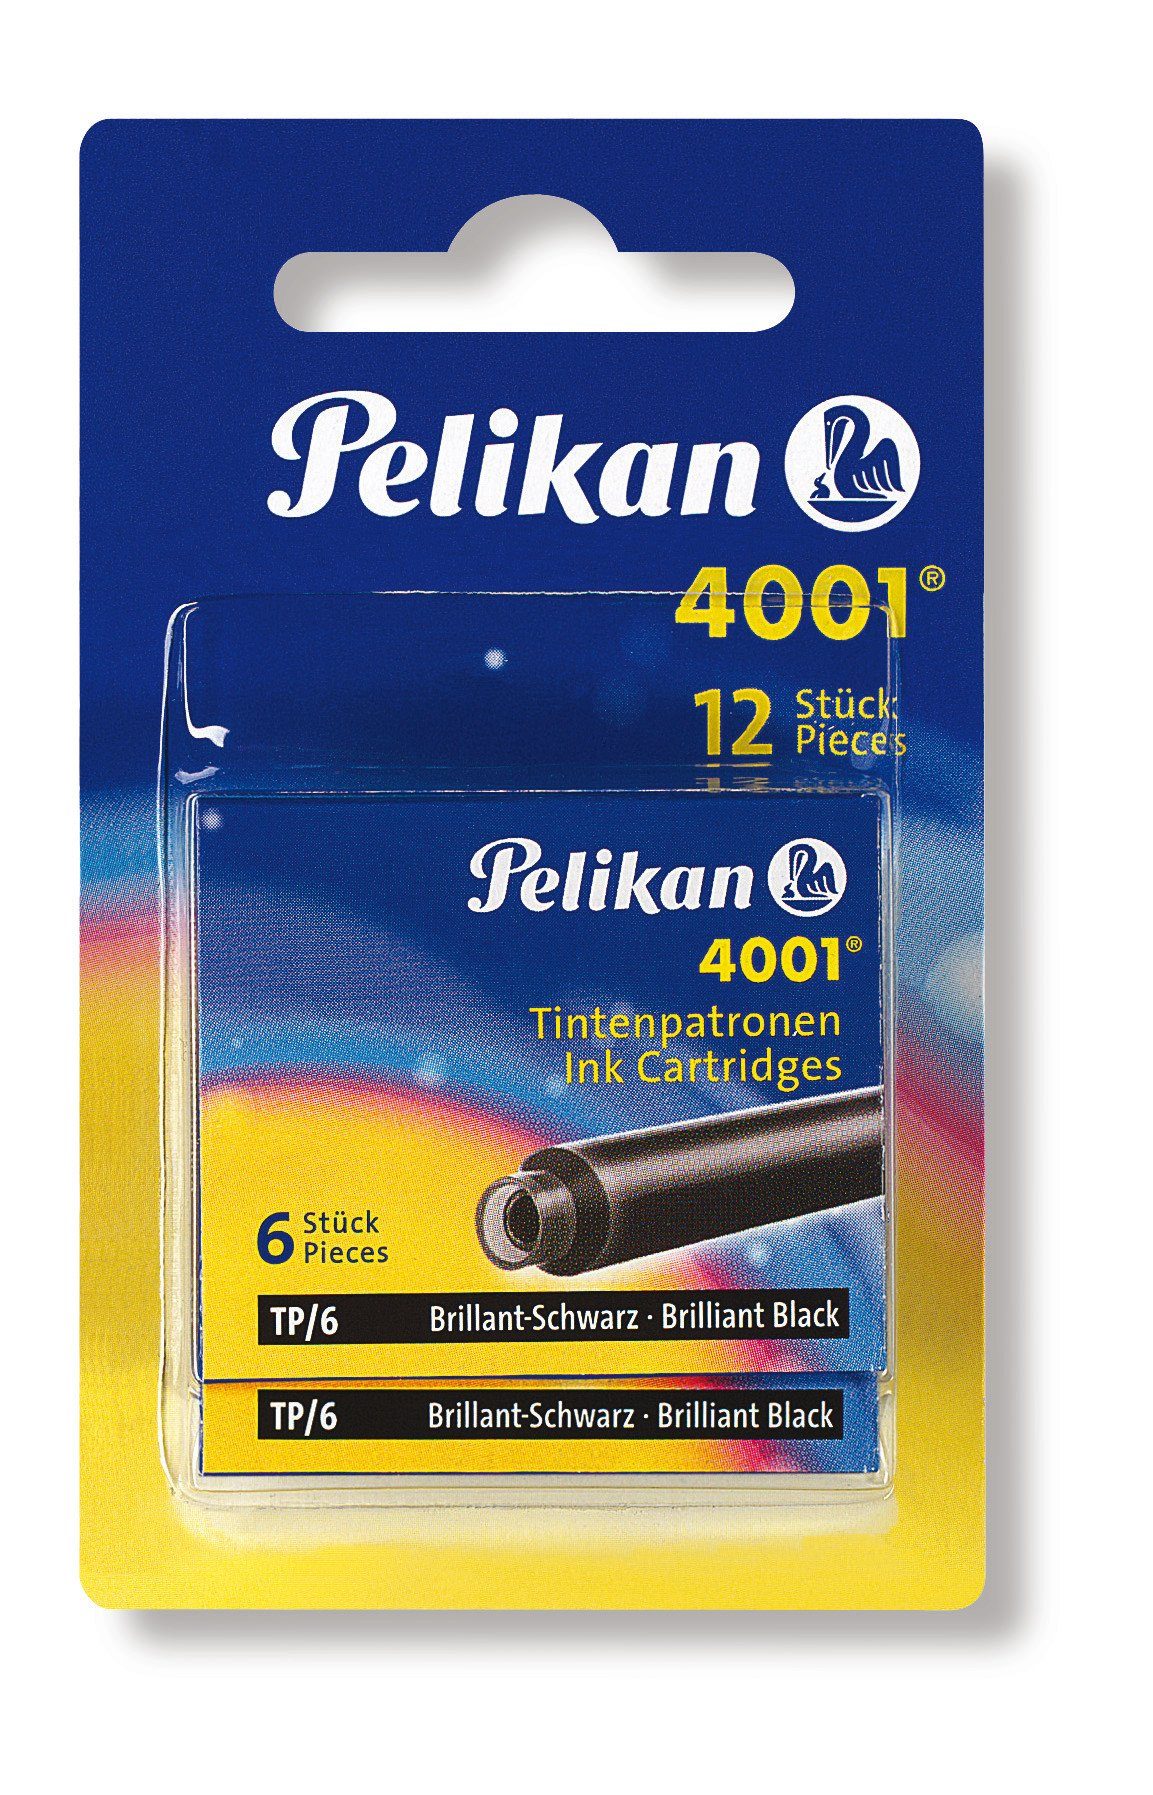 Pelikan 330803 brillant-schwarz Tintenpatronen Tintenpatrone Pelikan